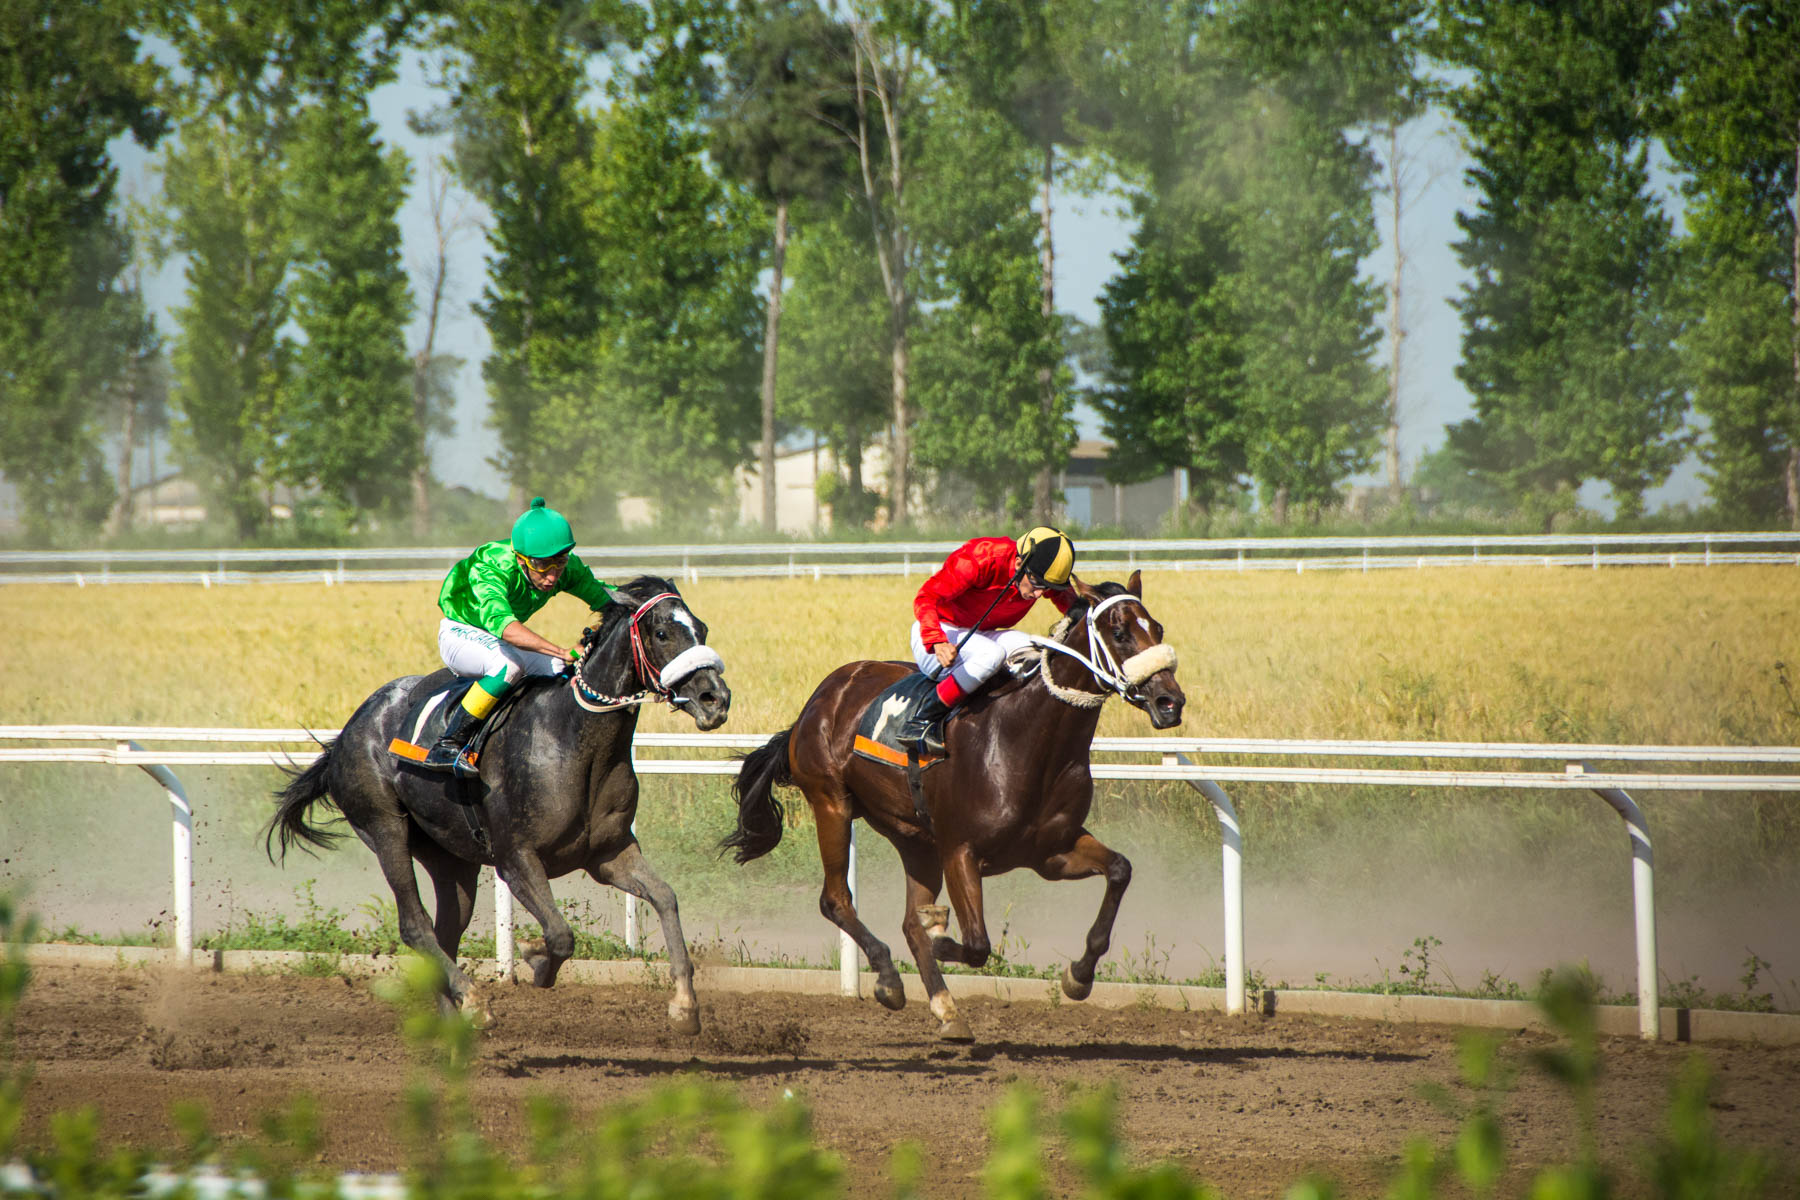 Horses racing in Gonbad-e Kavus, Iran.